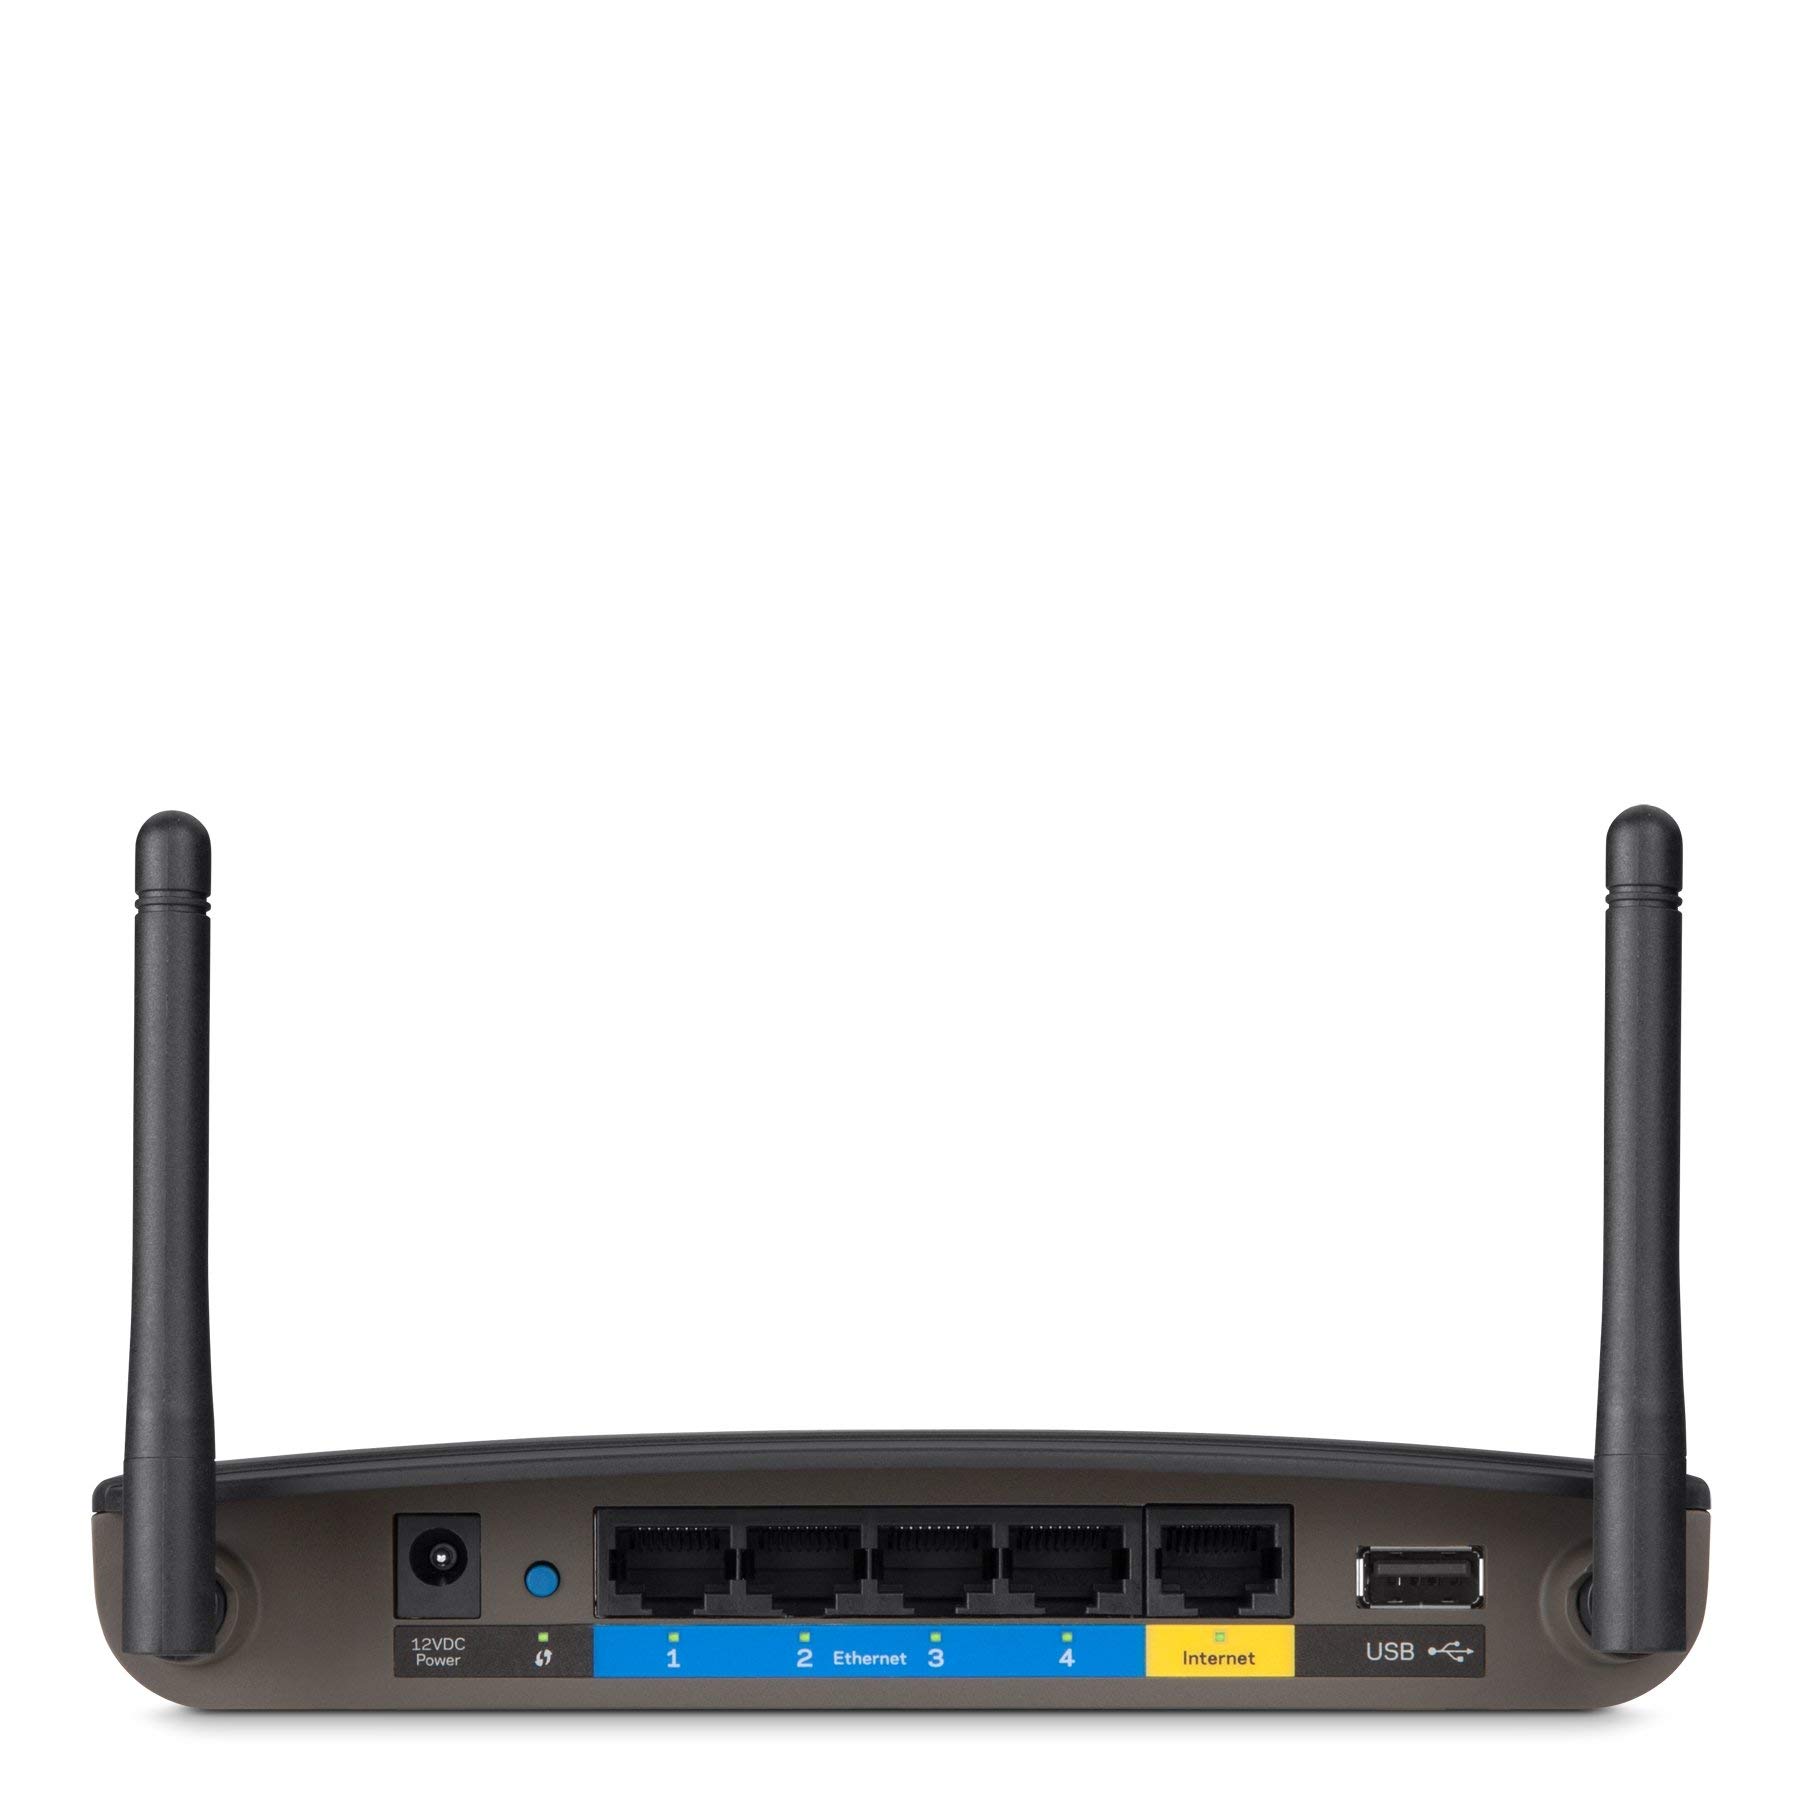 Linksys EA6100 AC1200 Wi-Fi Wireless Dual-Band Router, Black (Renewed)